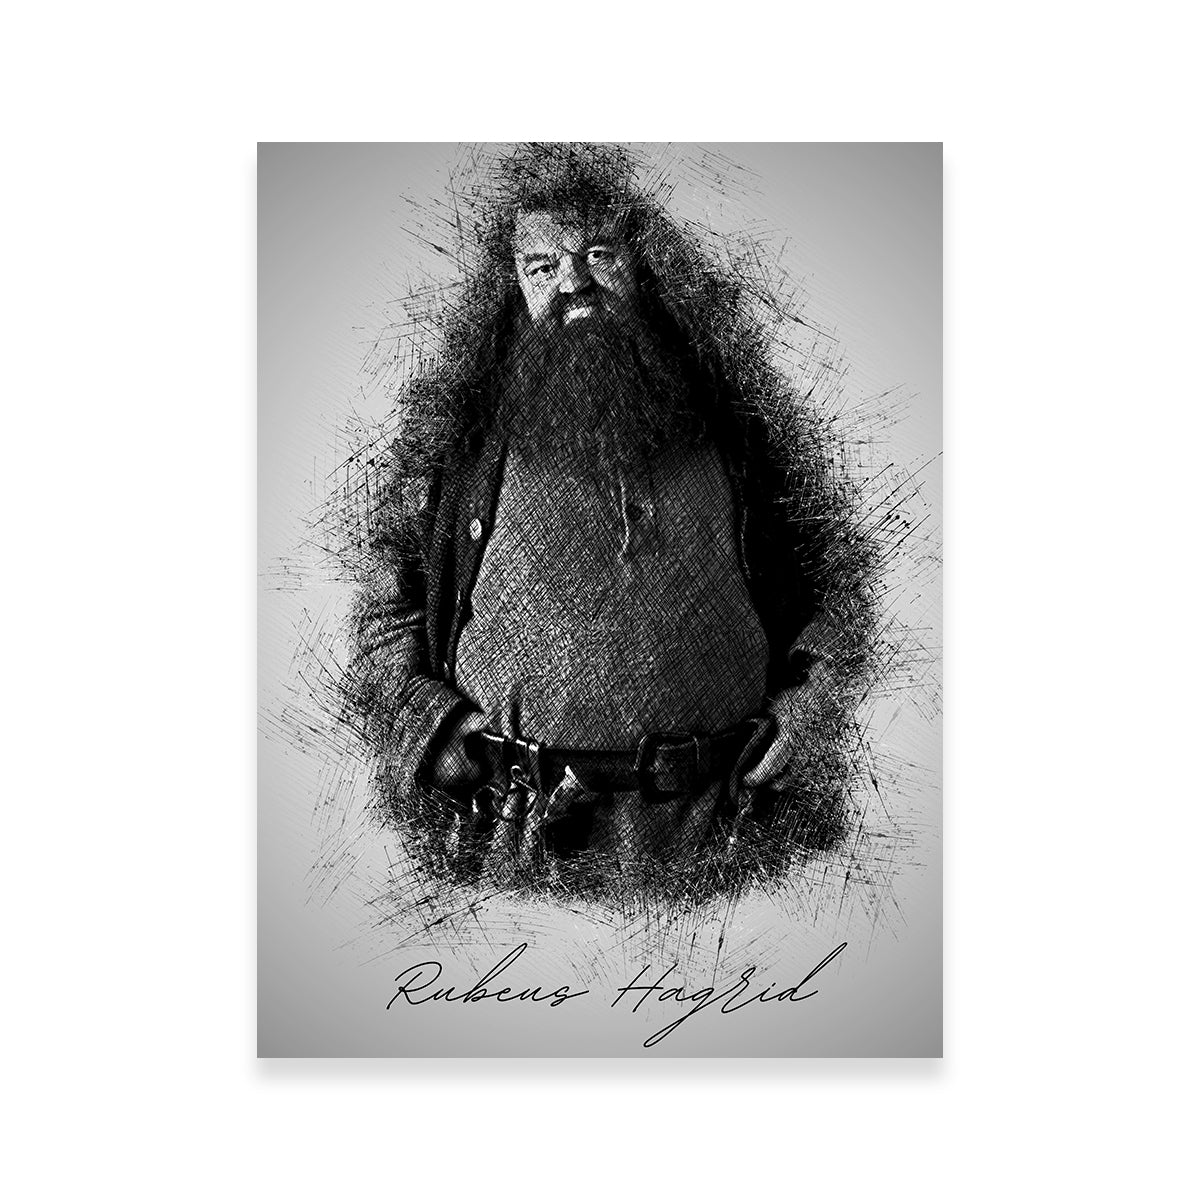 Rubeus Hagrid